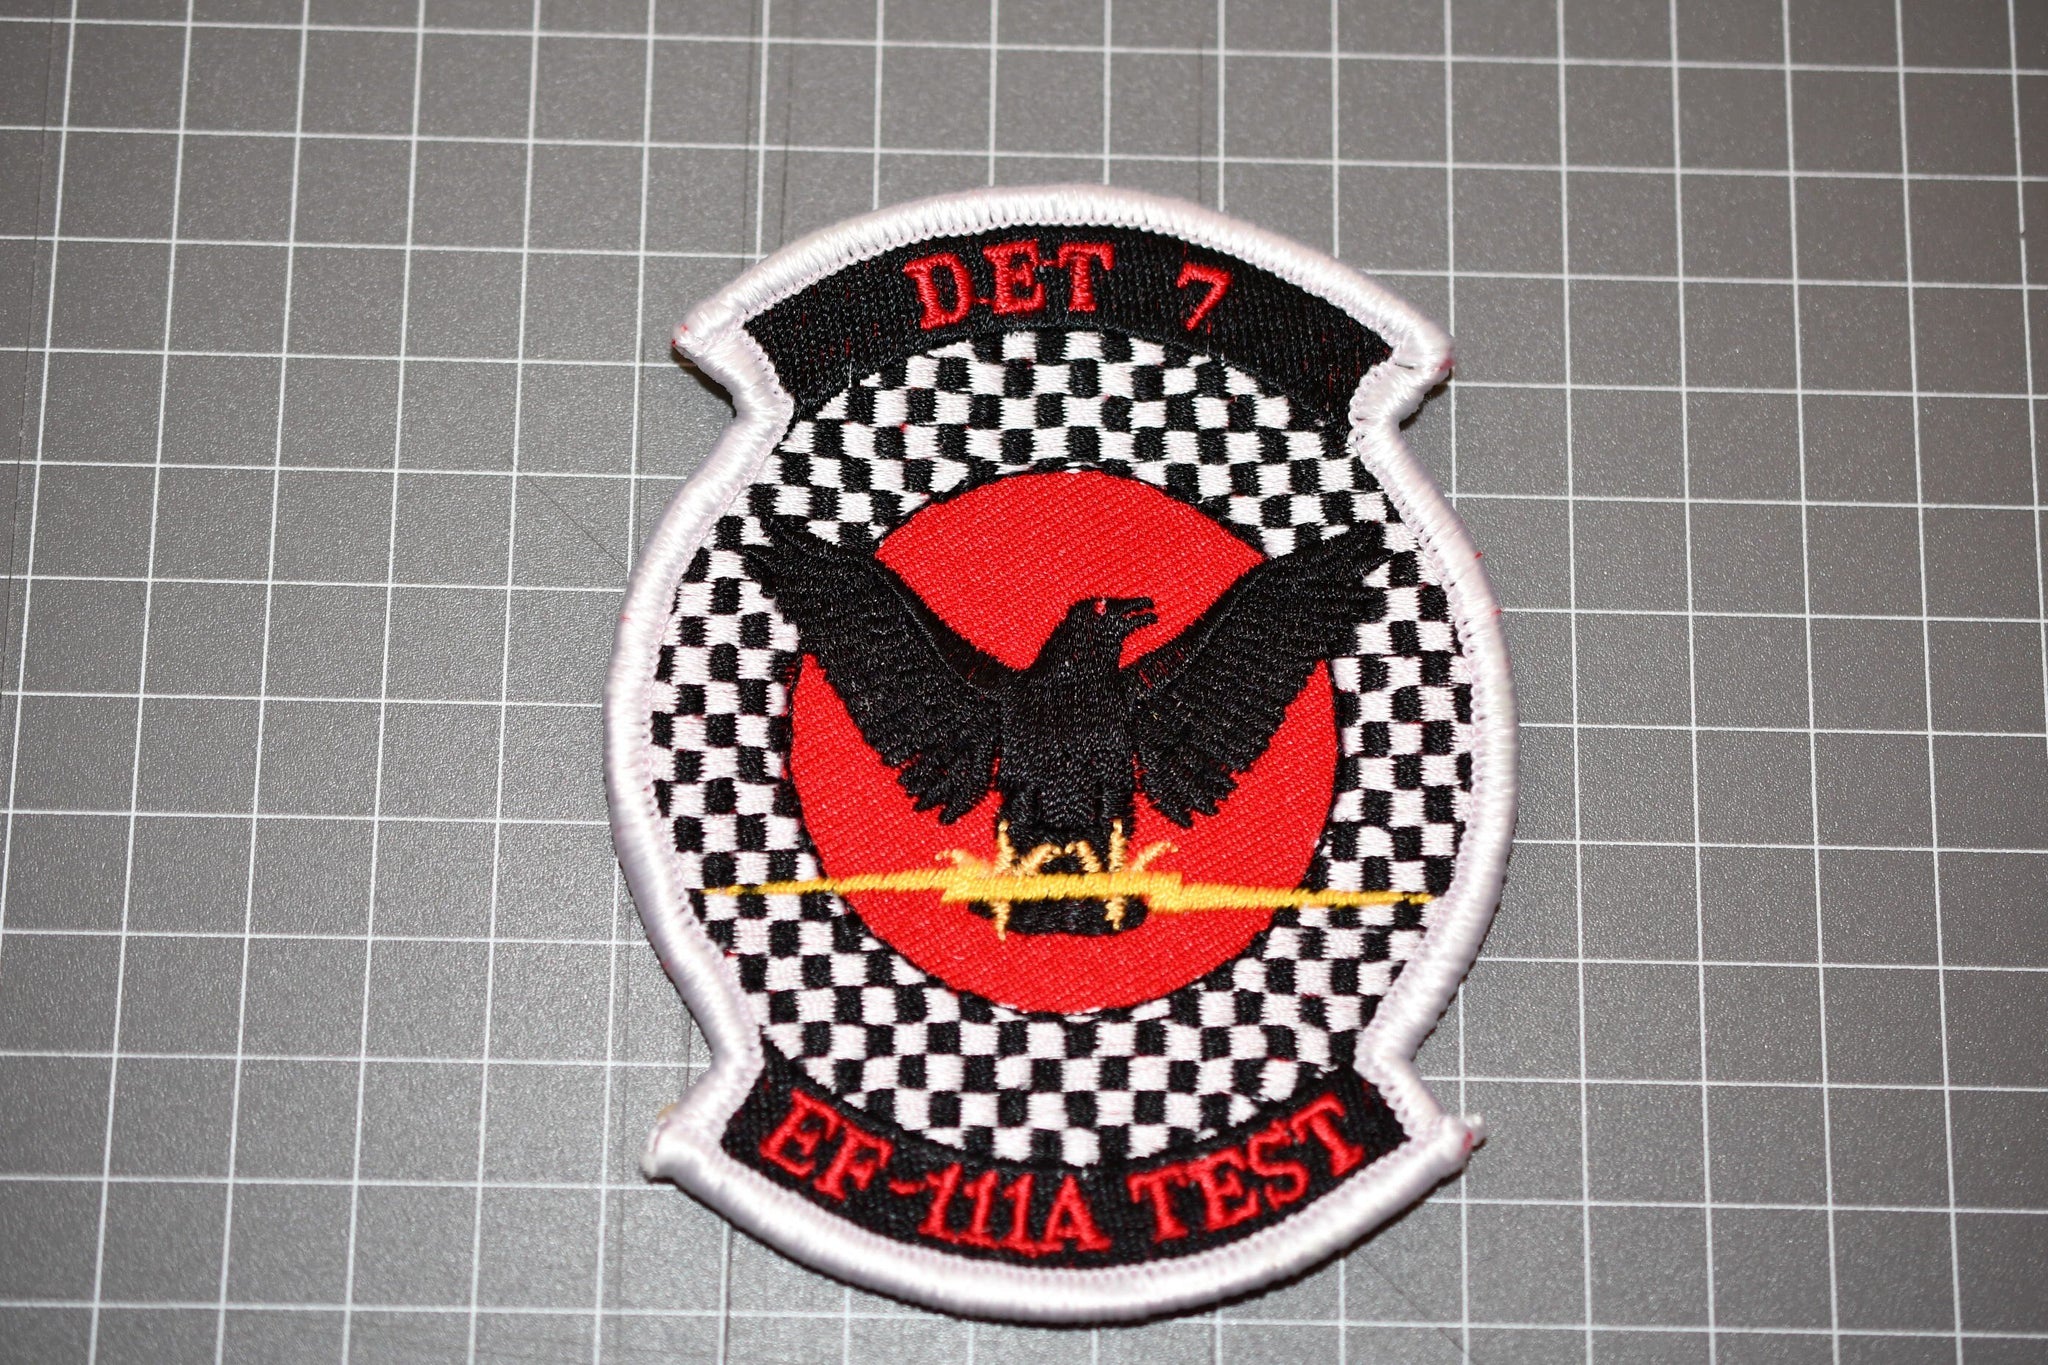 USAF EF-111A Test DET 7 Patch (B10-053)